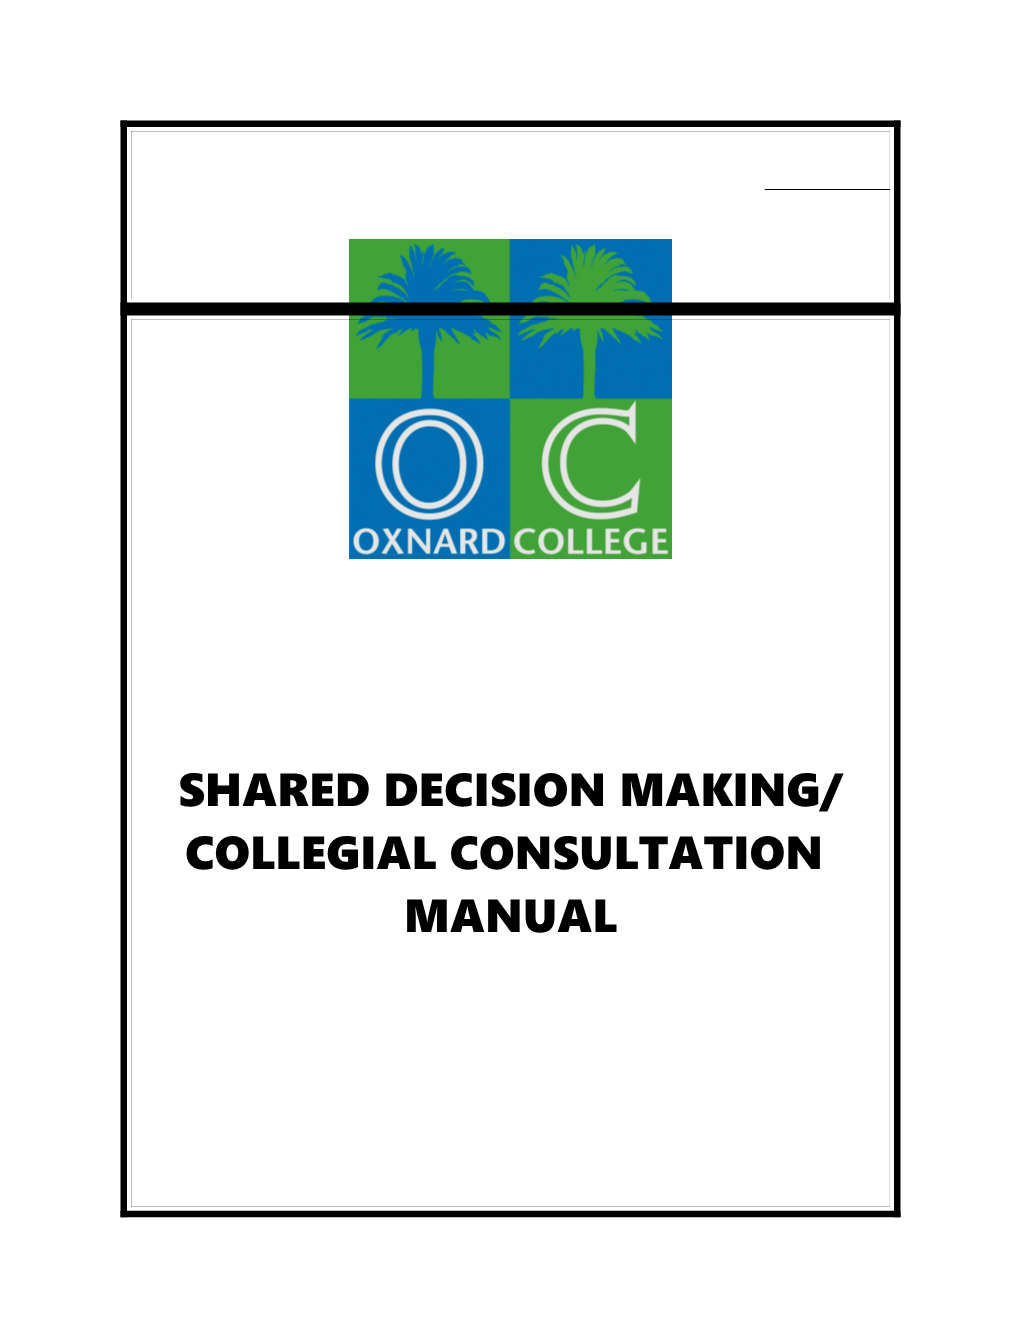 Shared Decision Making/Collegial Consultation